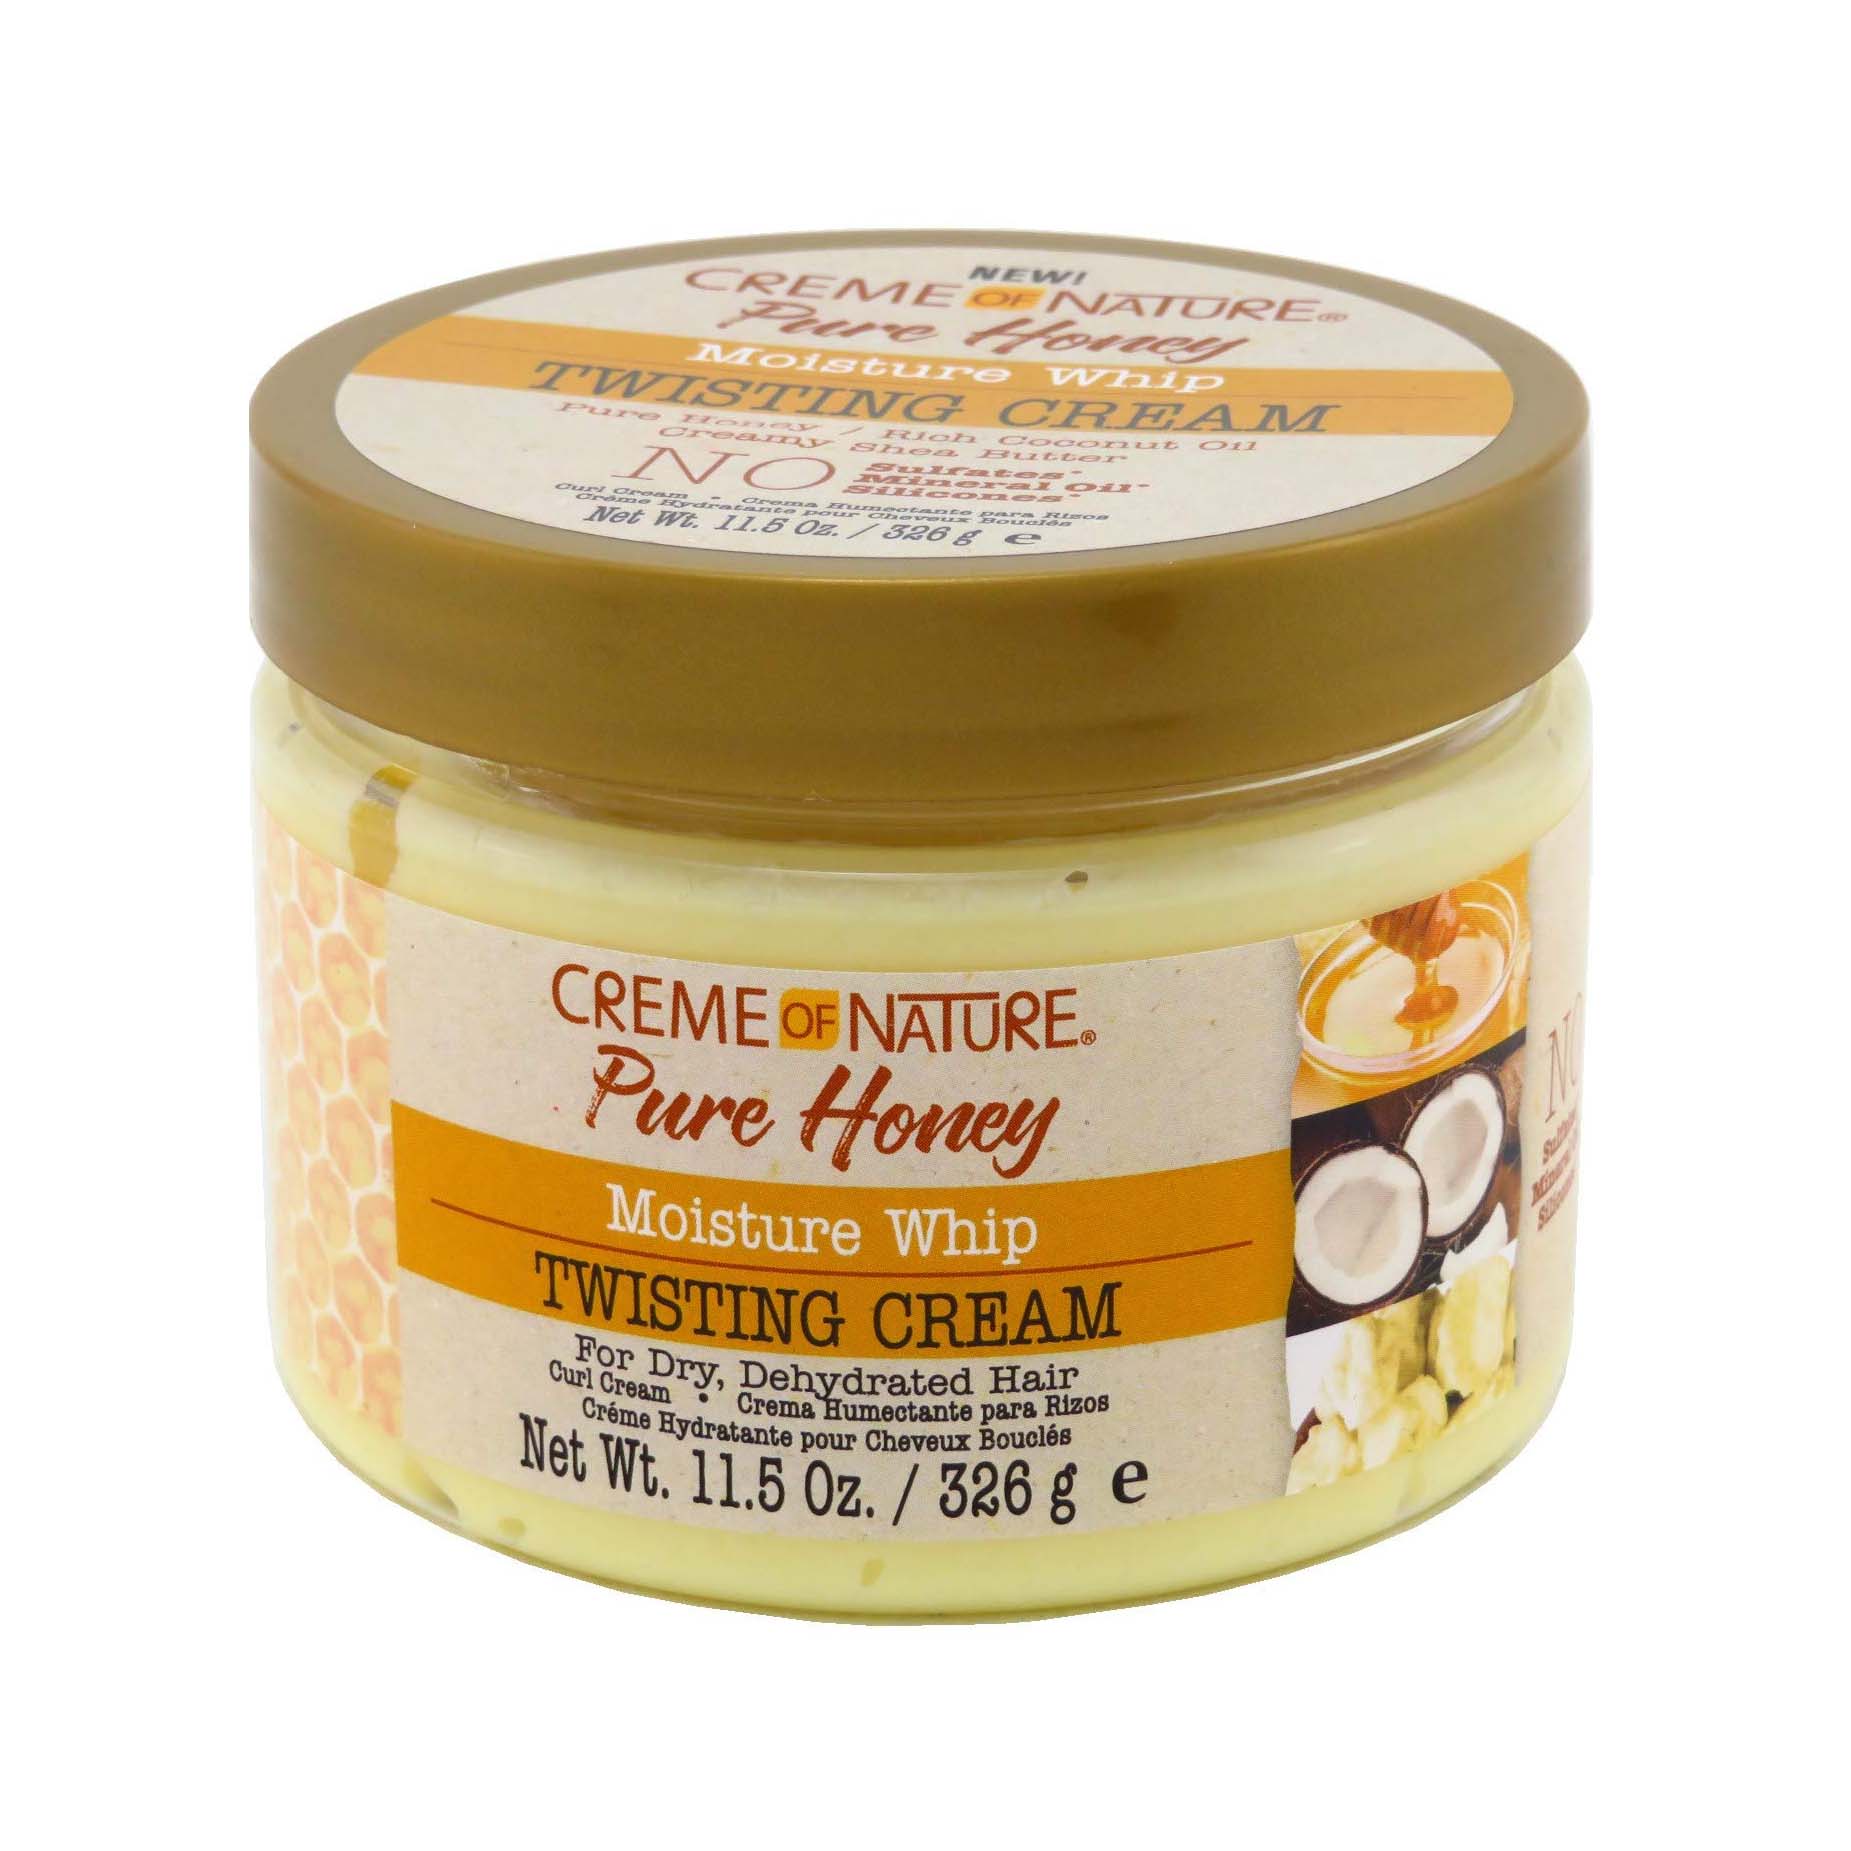 Creme Of Nature Pure Honey Moisture Whip Twisting Cream – 326gm - Bloom Pharmacy